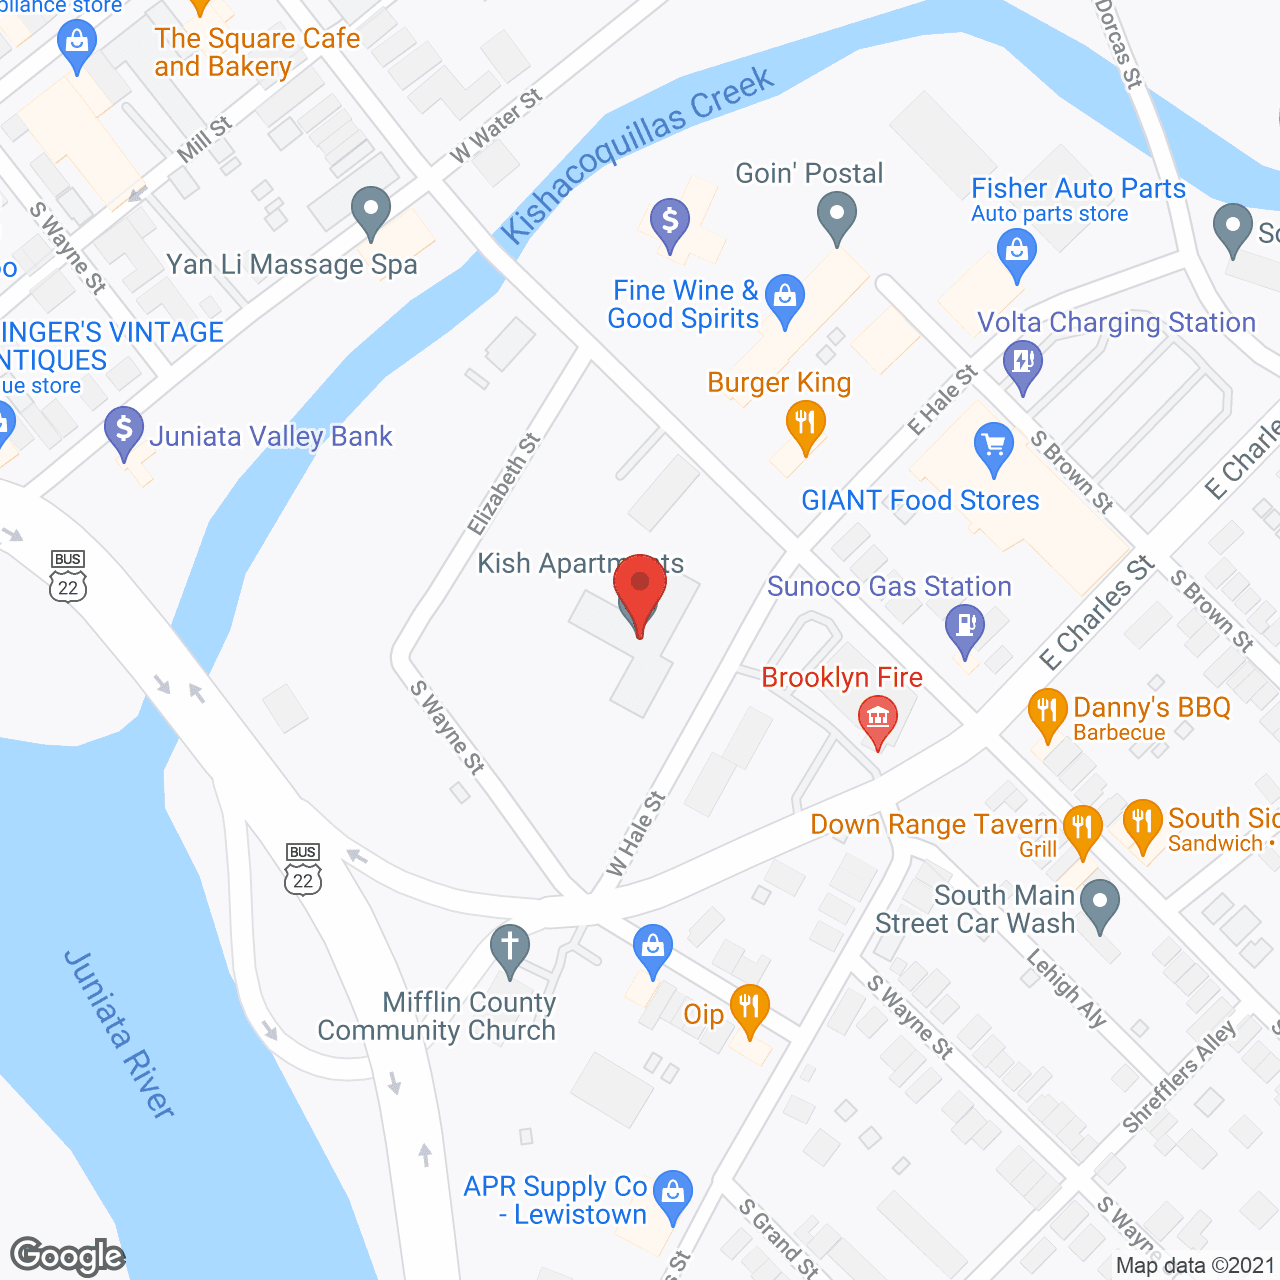 Kish Apartments in google map